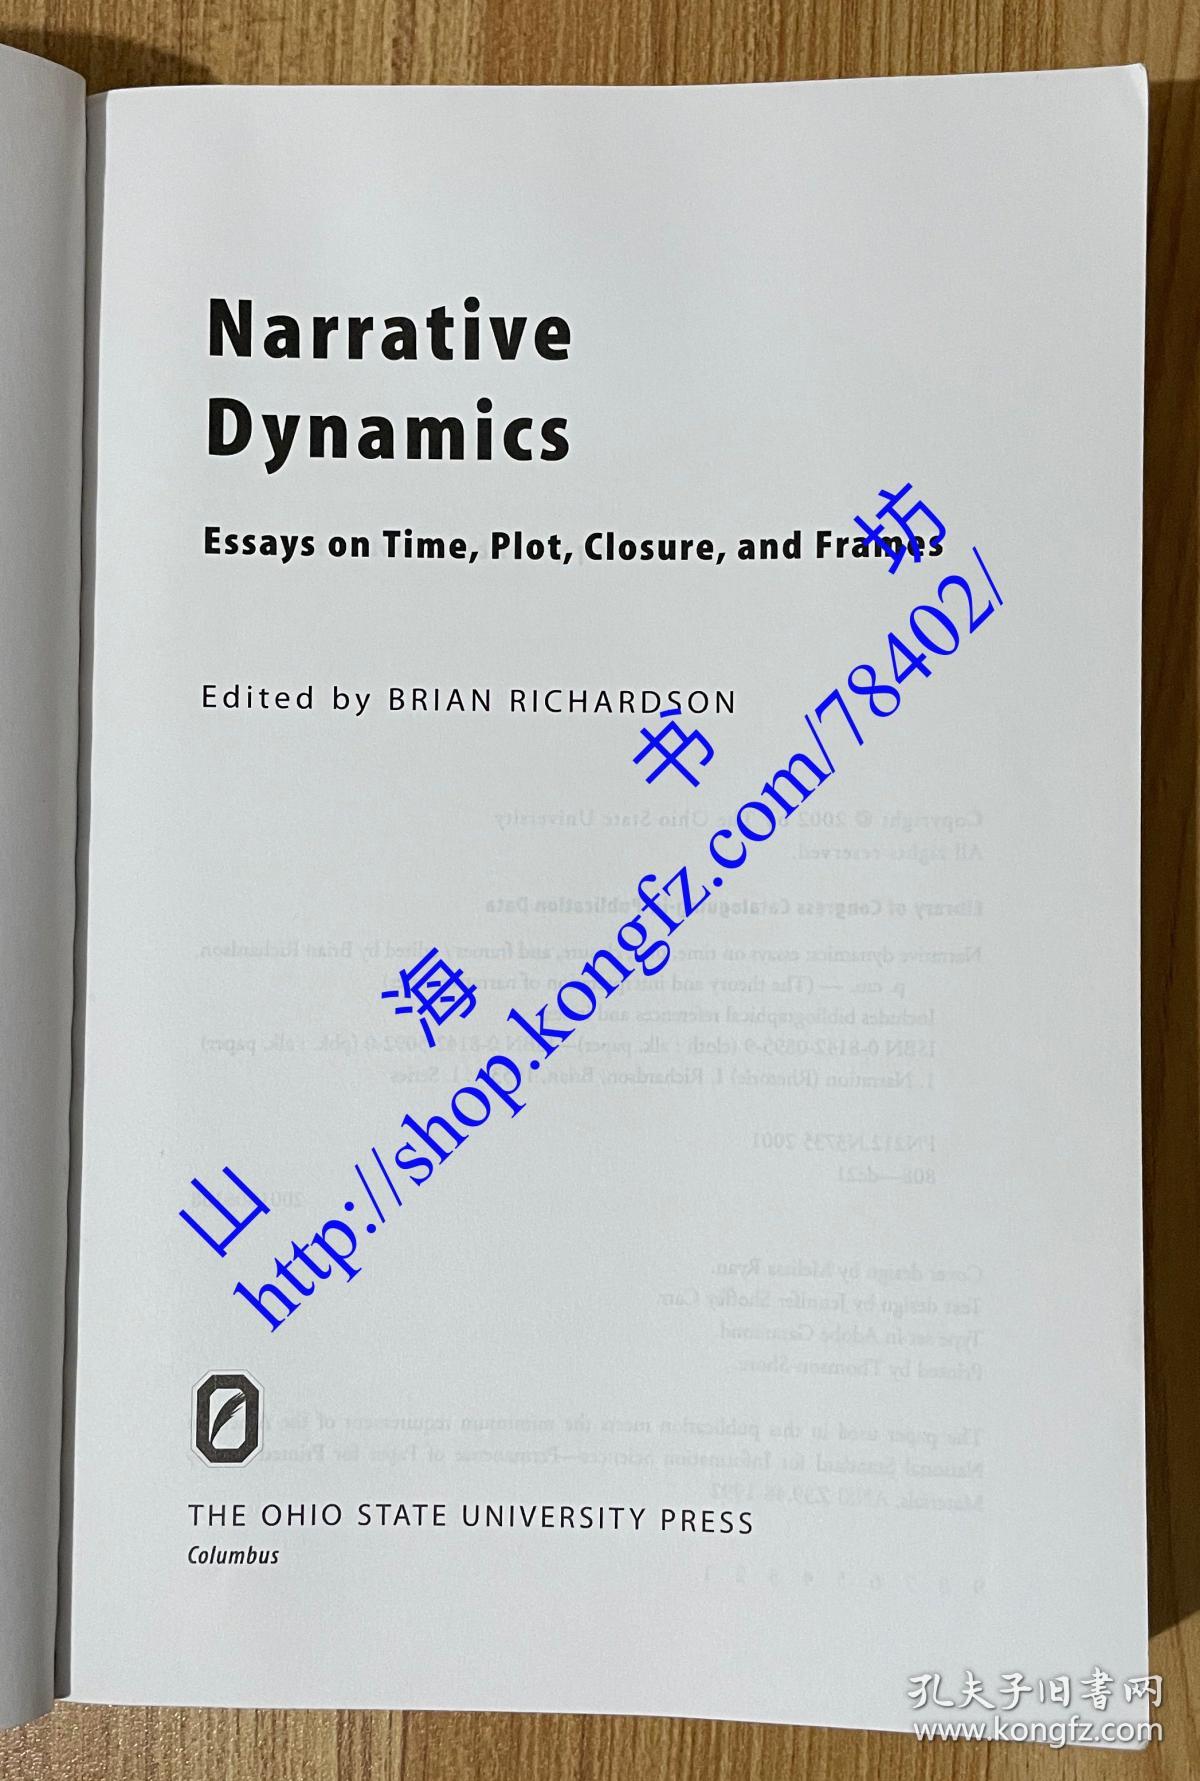 Narrative Dynamics: Essays on Time, Plot, Closure, and Frames